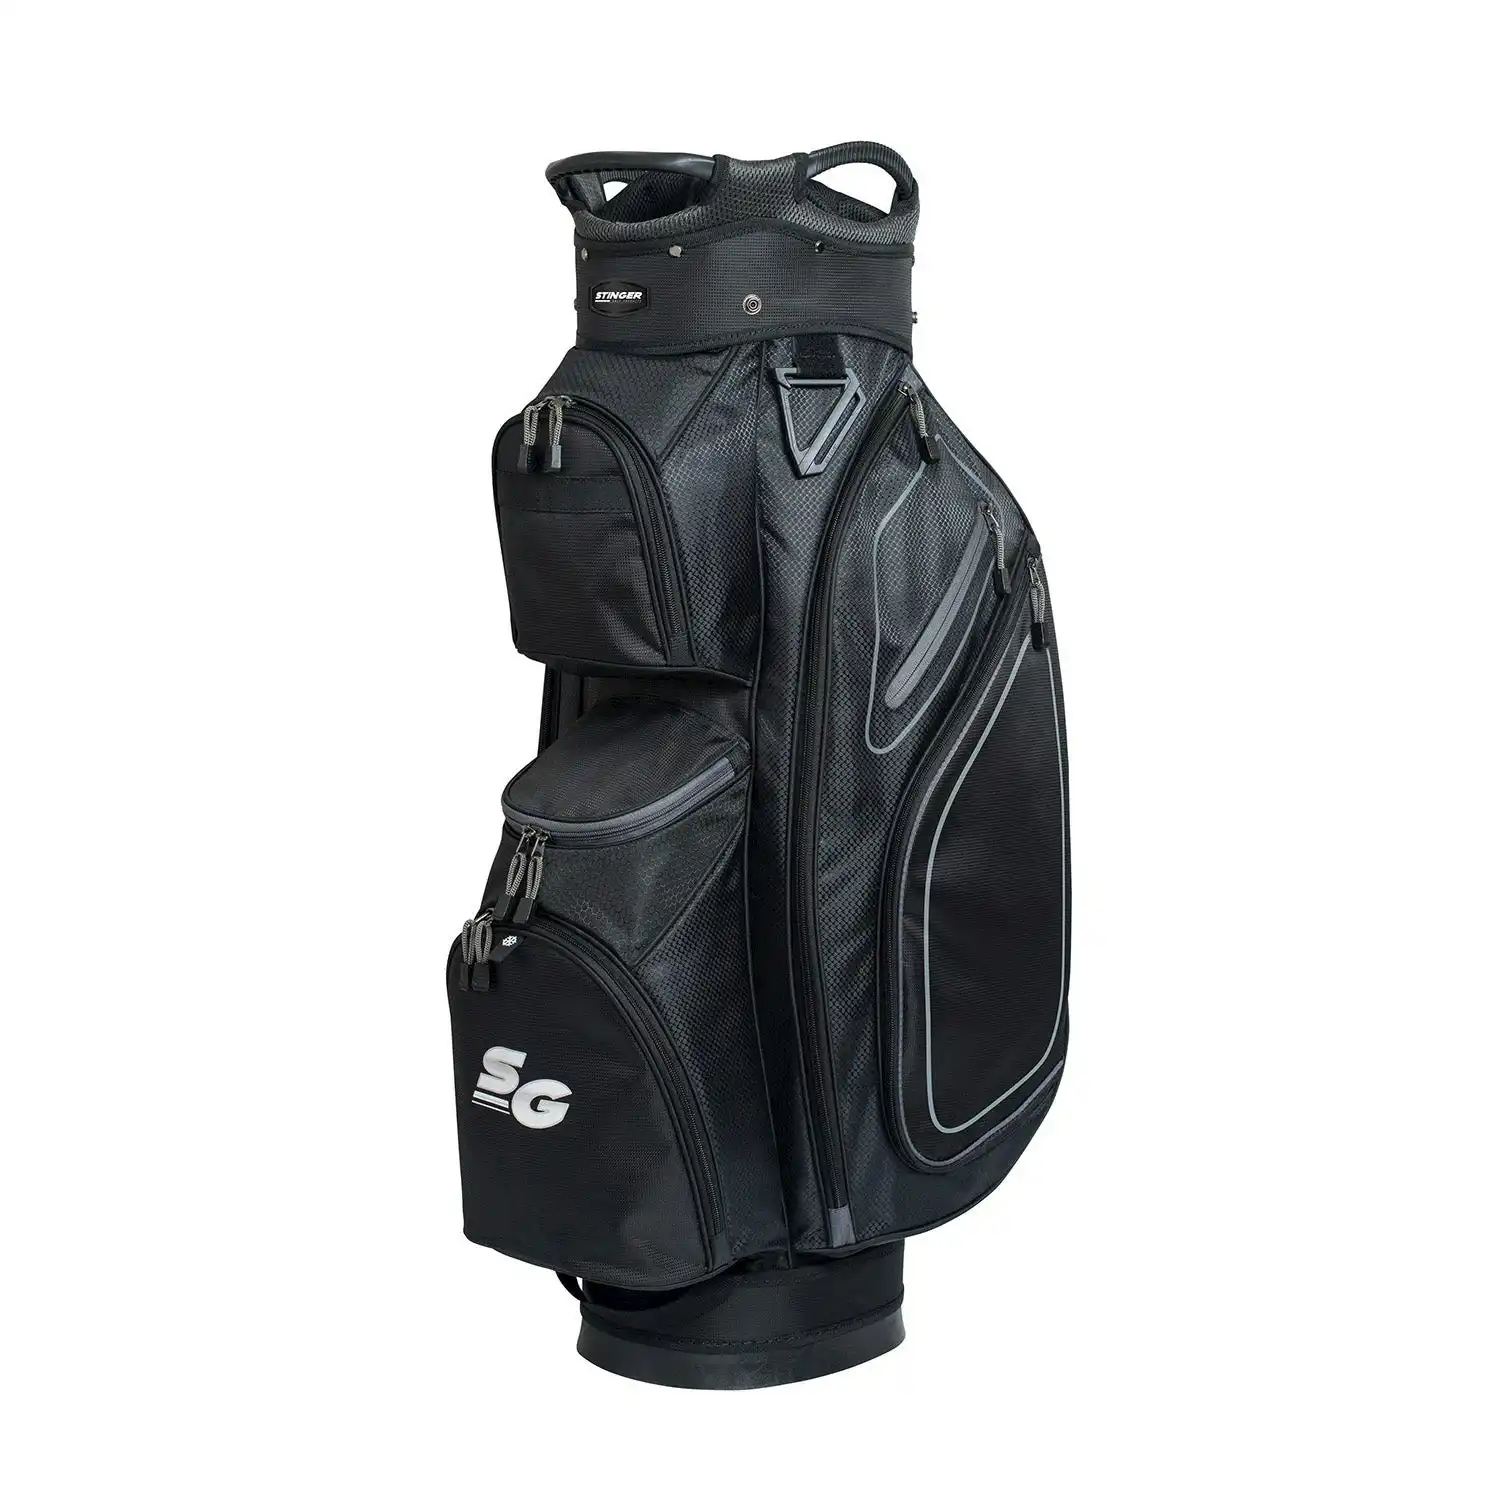 Stinger Lightweight Golf Bag - Black/Grey